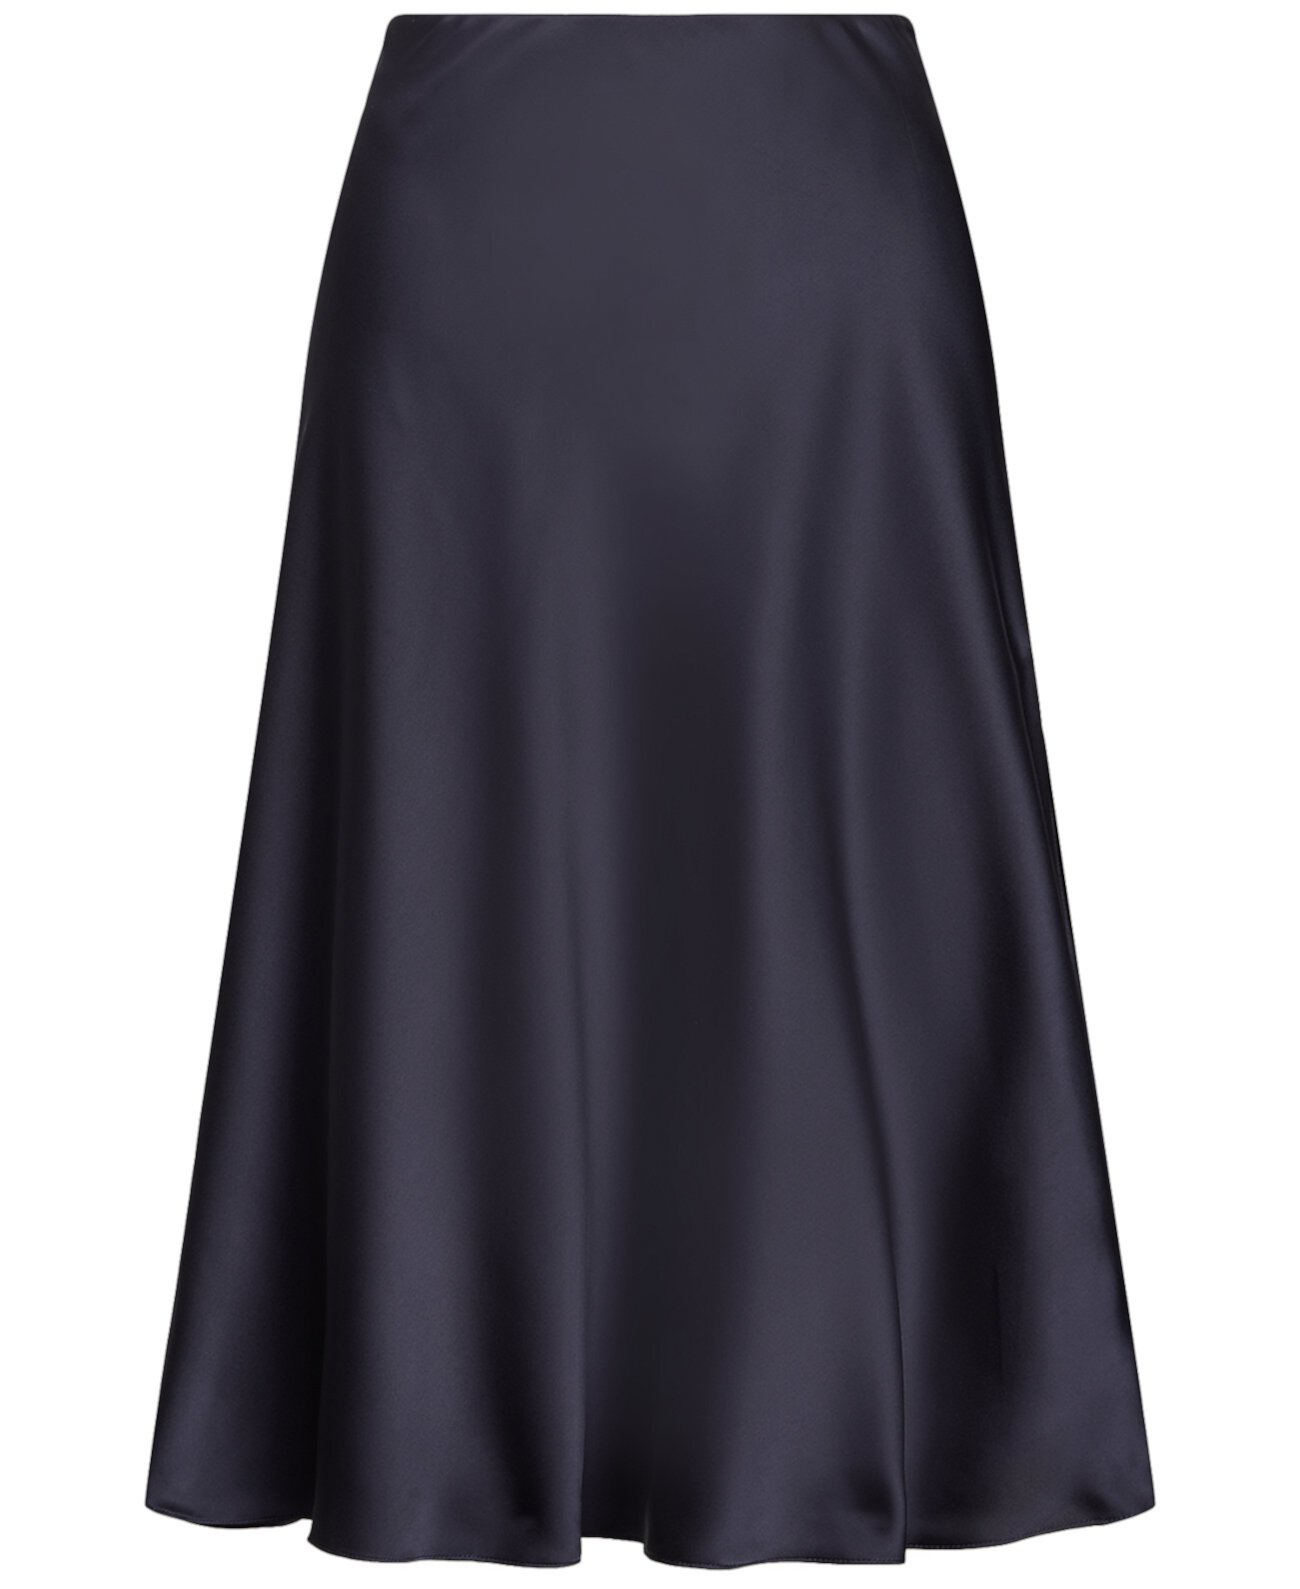 Plus-Size Satin Skirt Ralph Lauren